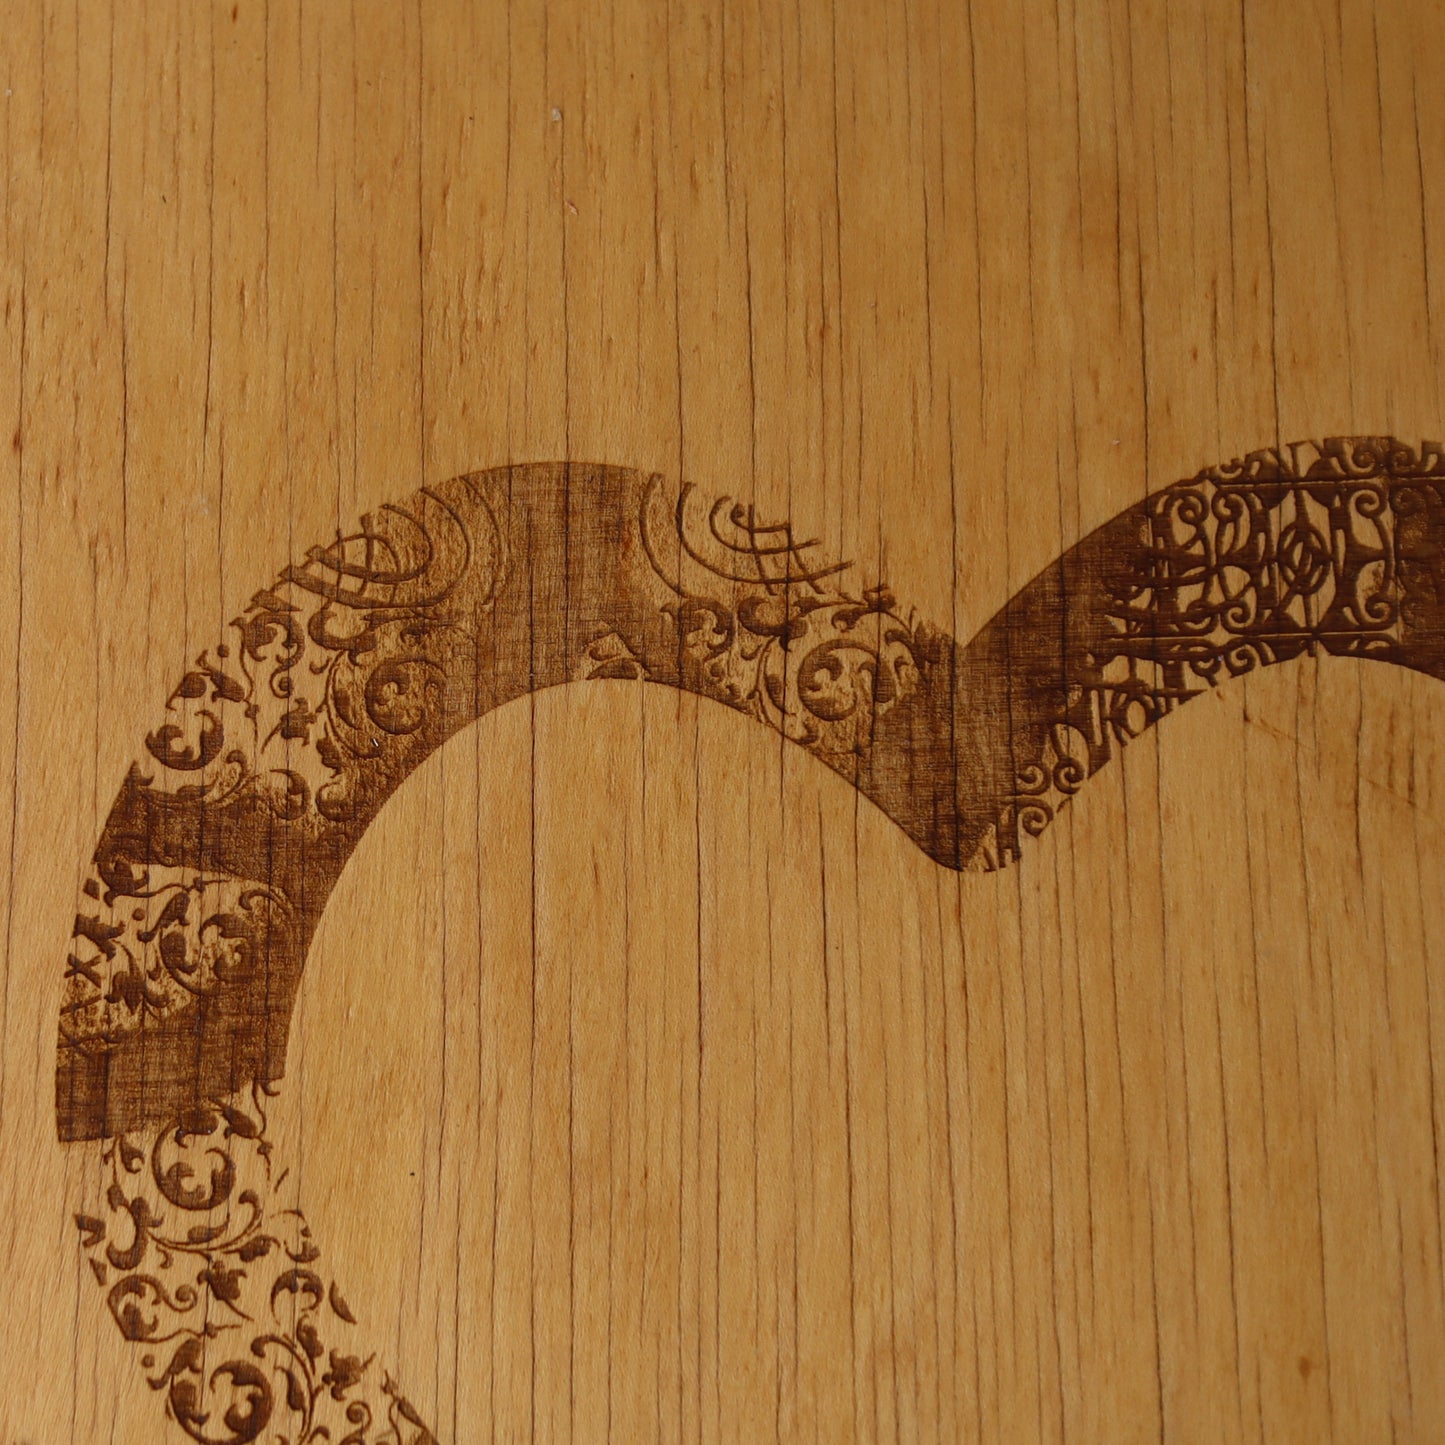 Ornamental Engraved Heart Outline Artwork